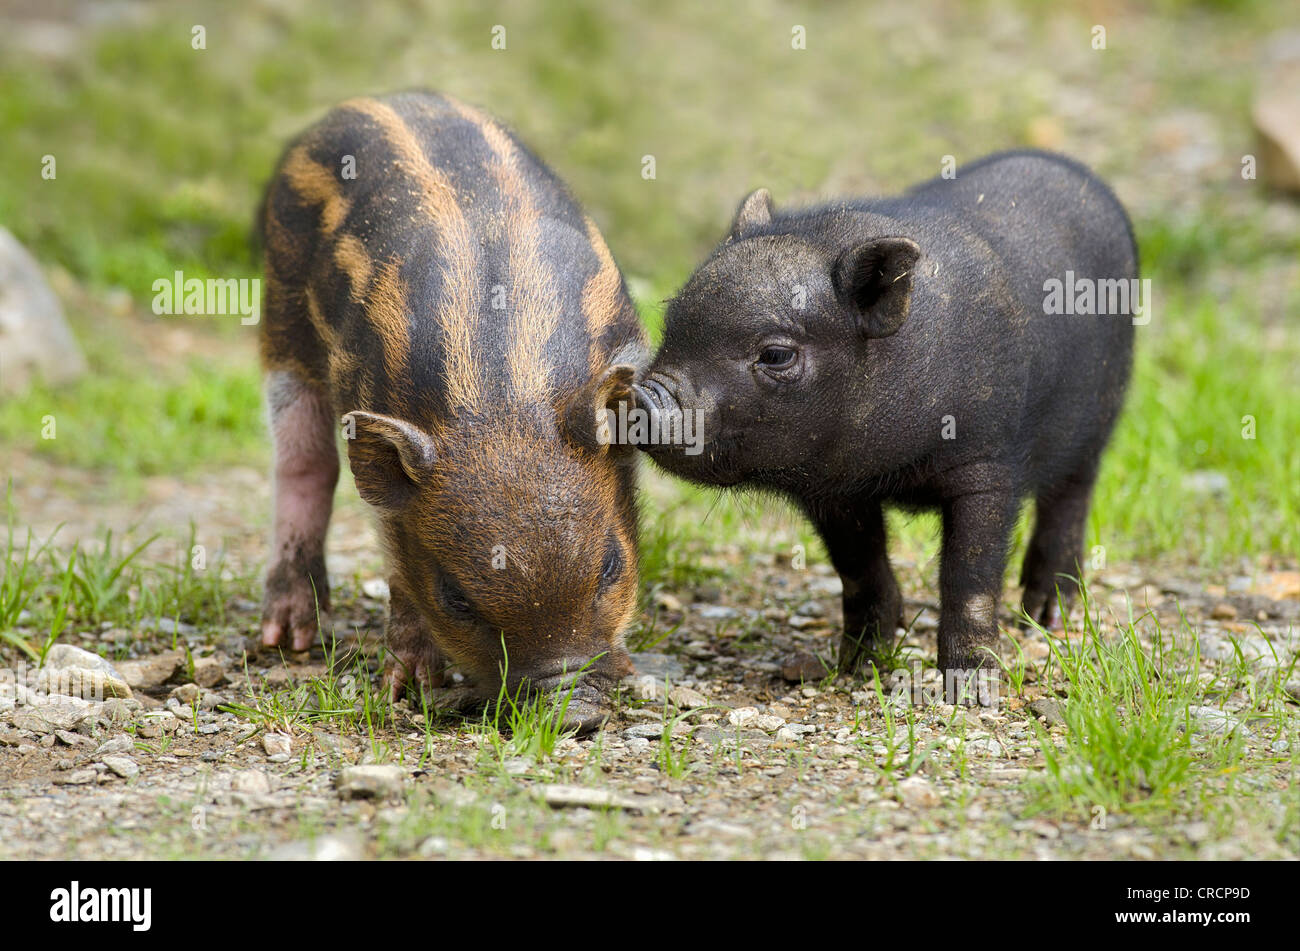 Pot-bellied pig (Sus scrofa), piglets, Wildpark Assling wildlife park, East Tyrol, Austria, Europe Stock Photo